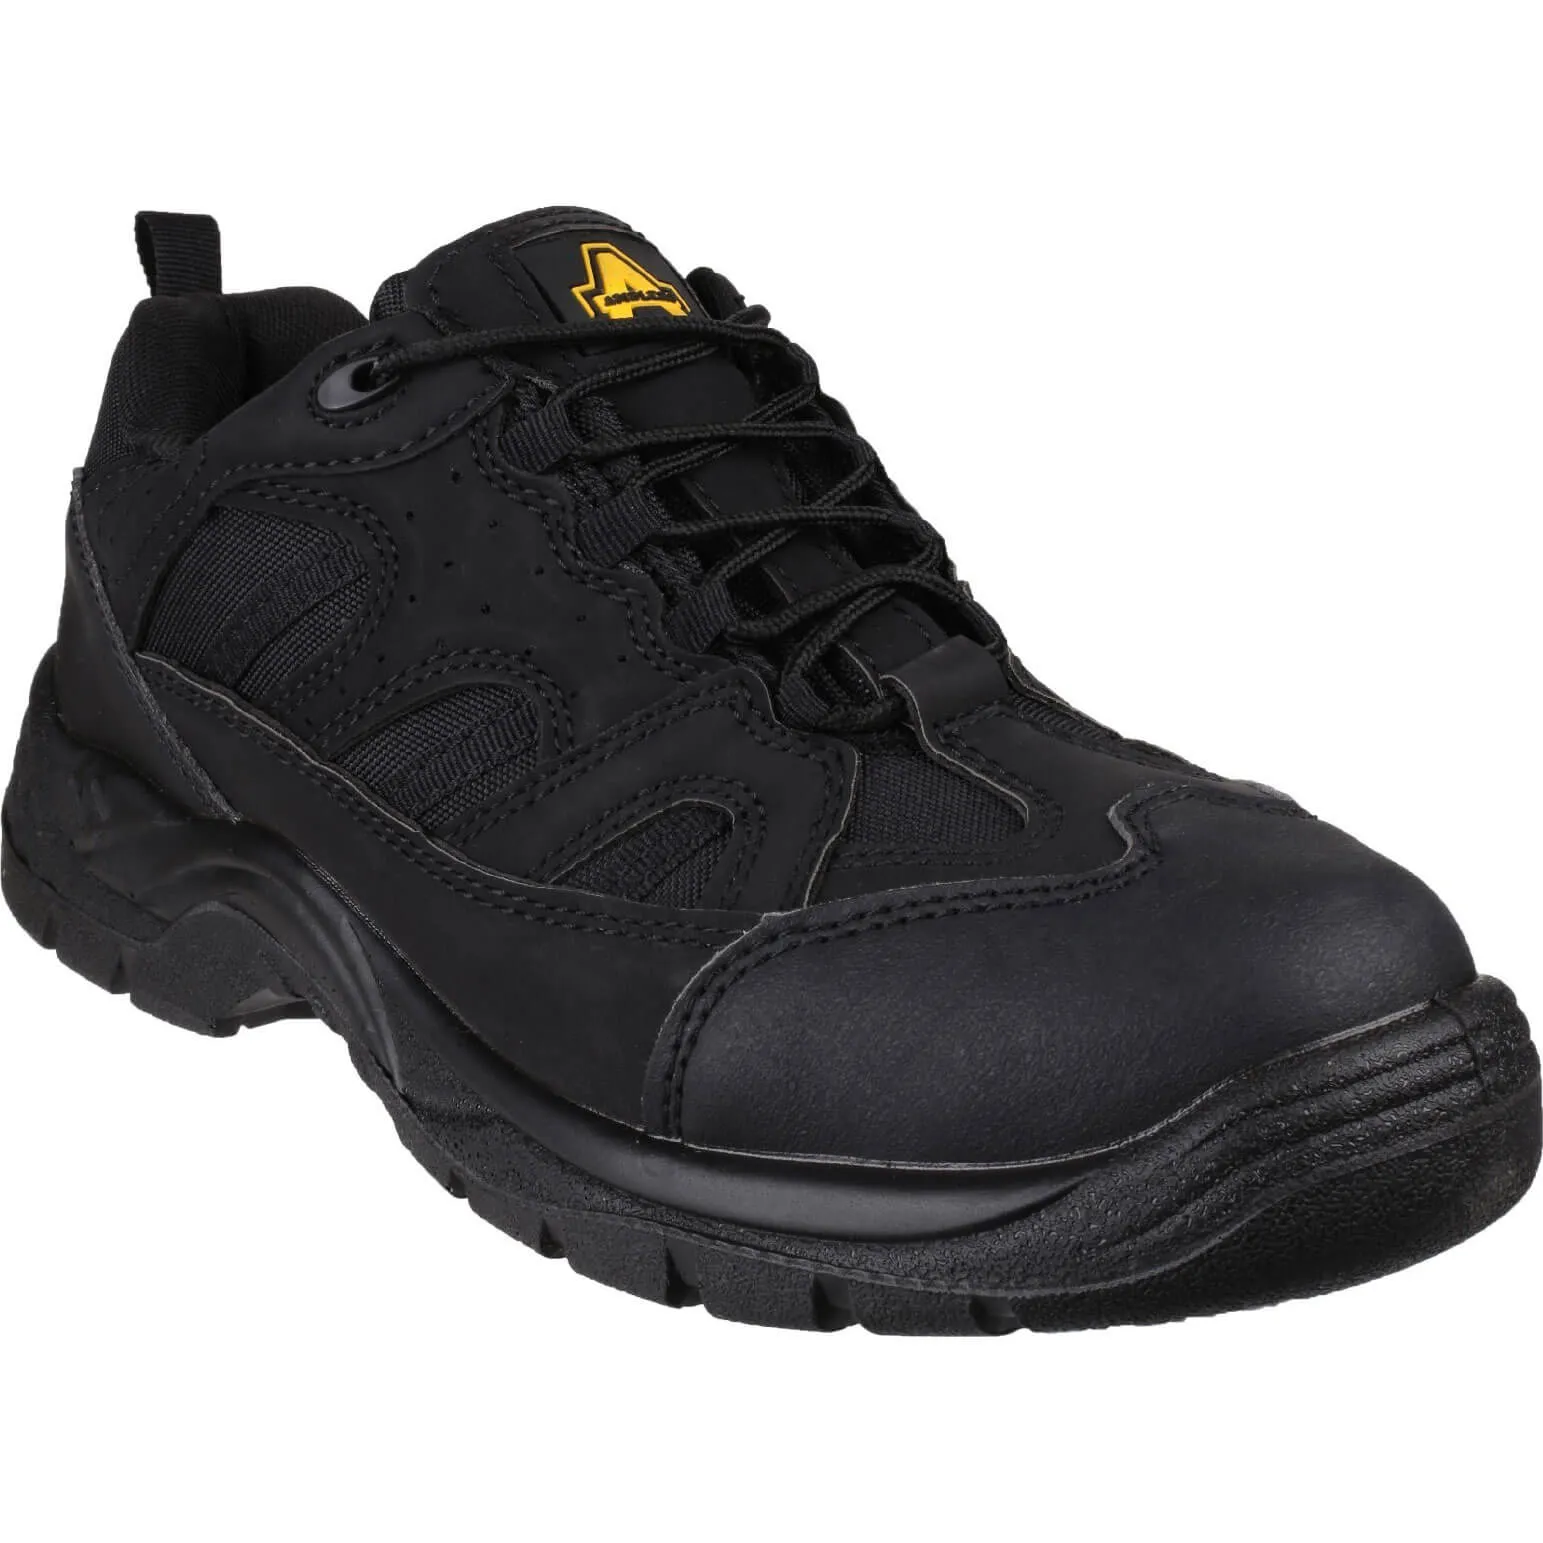 Amblers Safety FS214 Vegan Friendly Safety Shoes - Black, Size 4